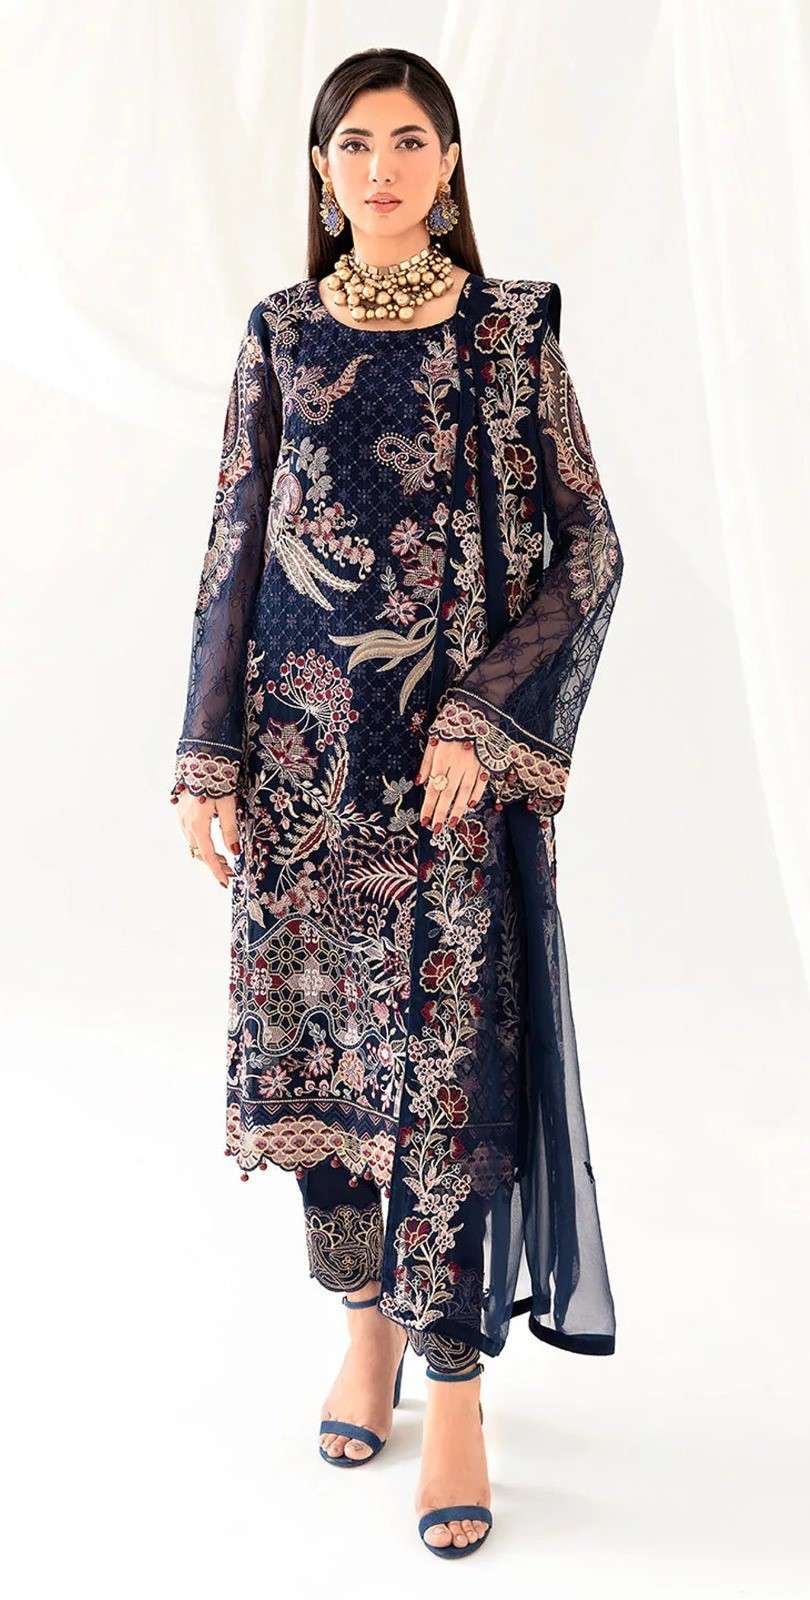 mushq 263-268 series heavy faux georgette embroidered pakistani salwar suits wholesale price surat gujarat